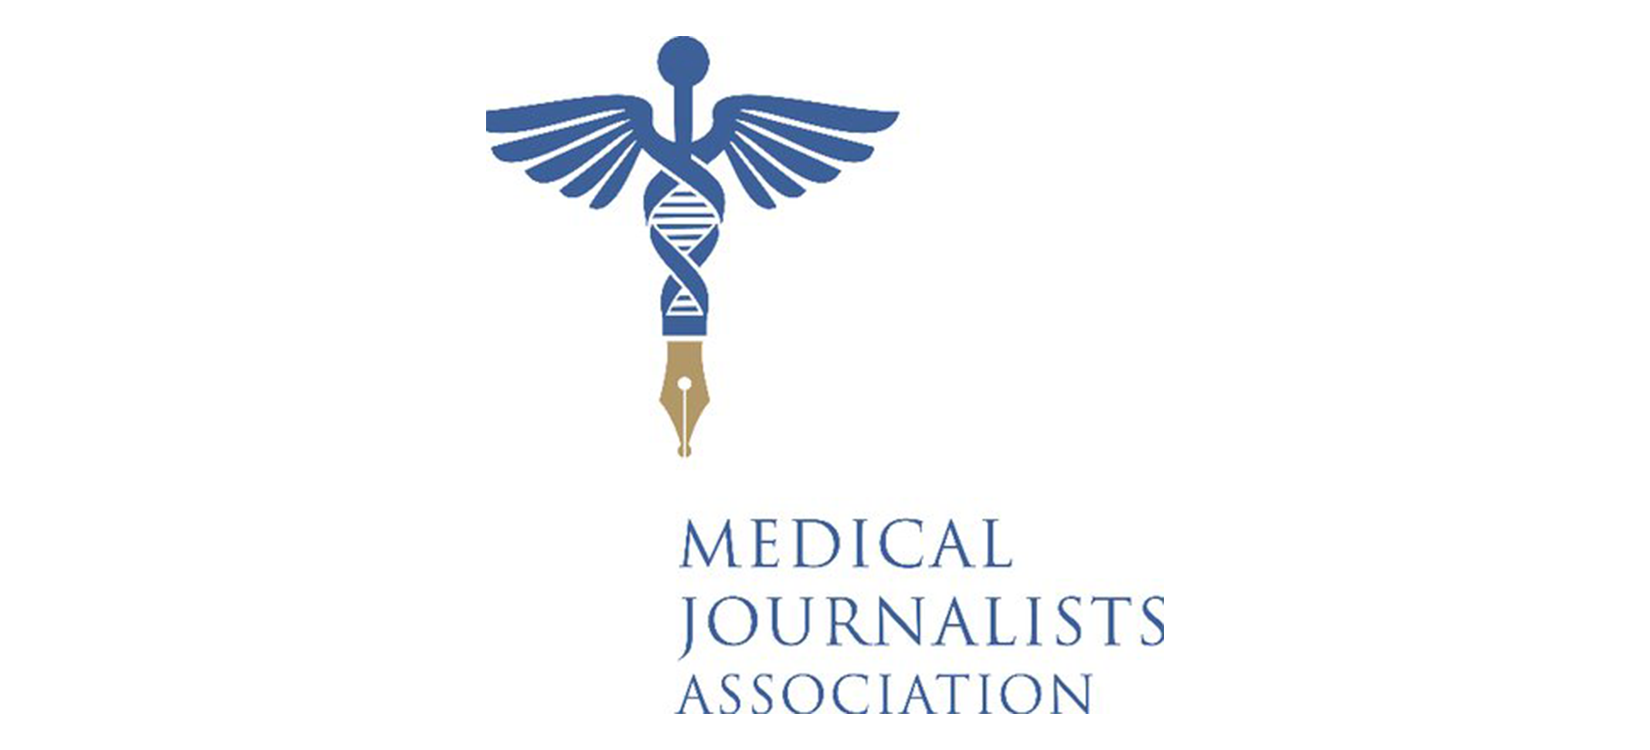 Medical Journalist Association Awards logo